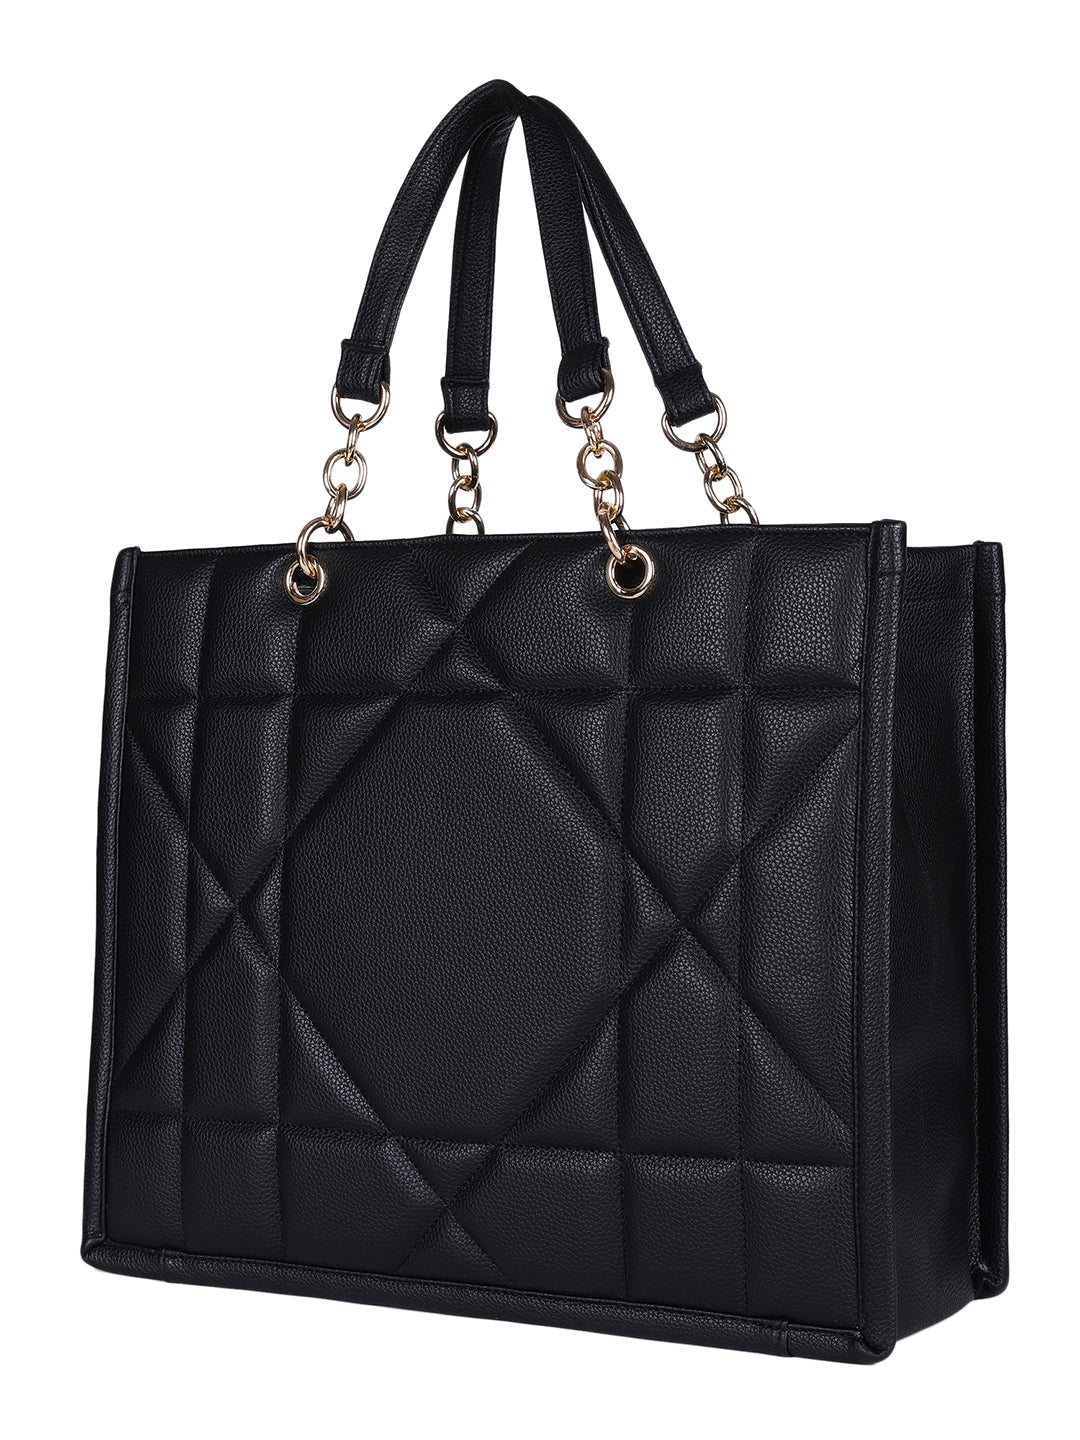 DENVER BAGS MINI WESST Black Textured Tote Bag(MWTB105BL)